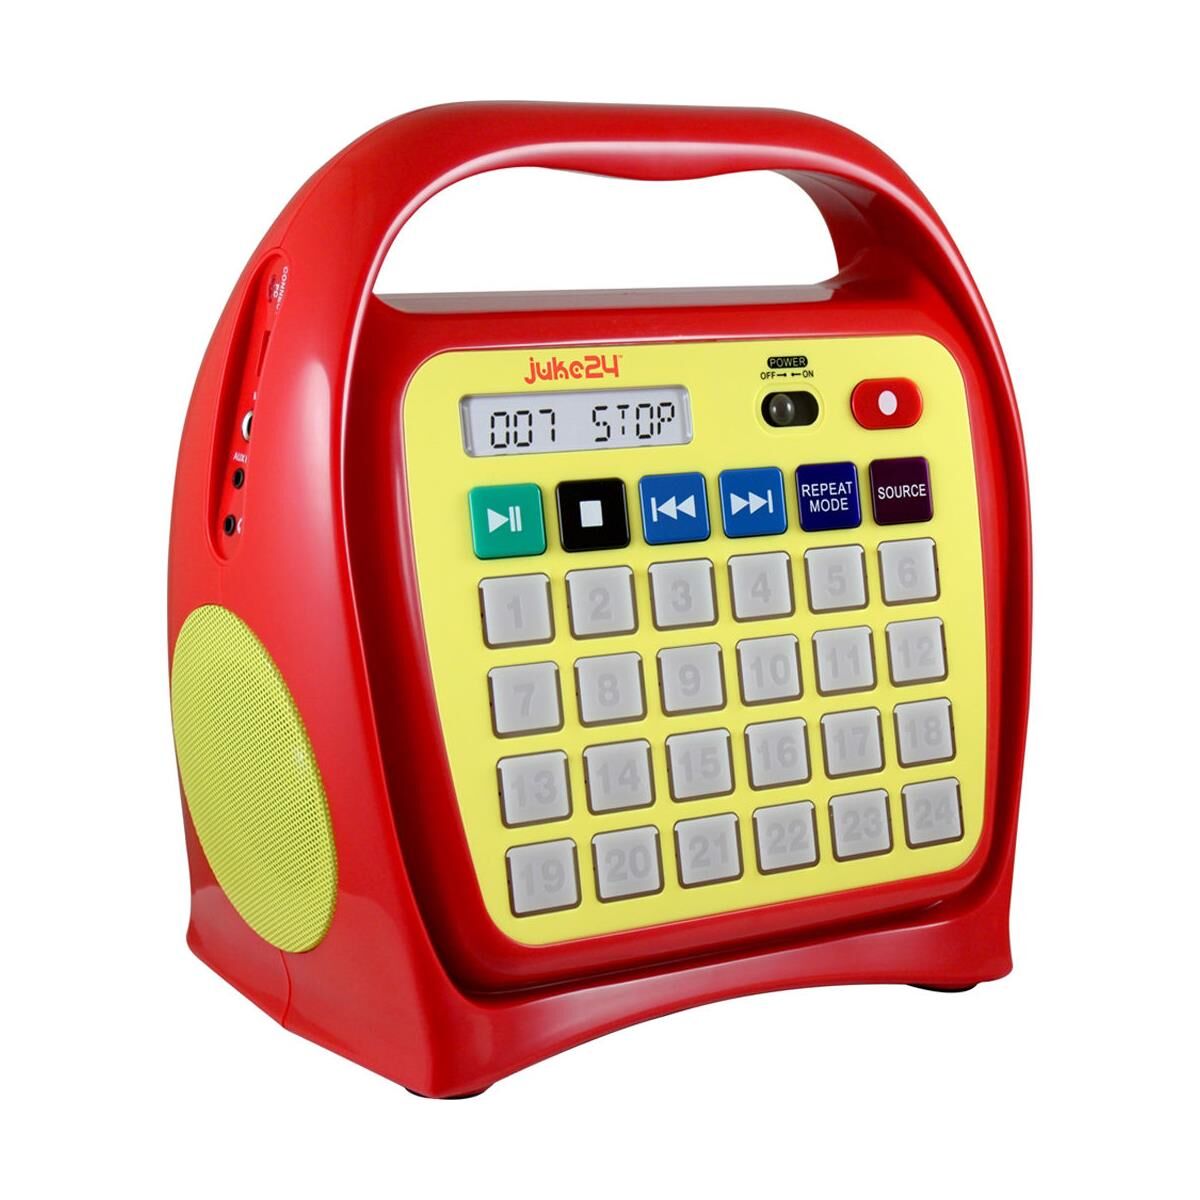 Hamilton Buhl HamiltonBuhl Juke24 Portable Digital Jukebox with CD Player, Red and Yellow